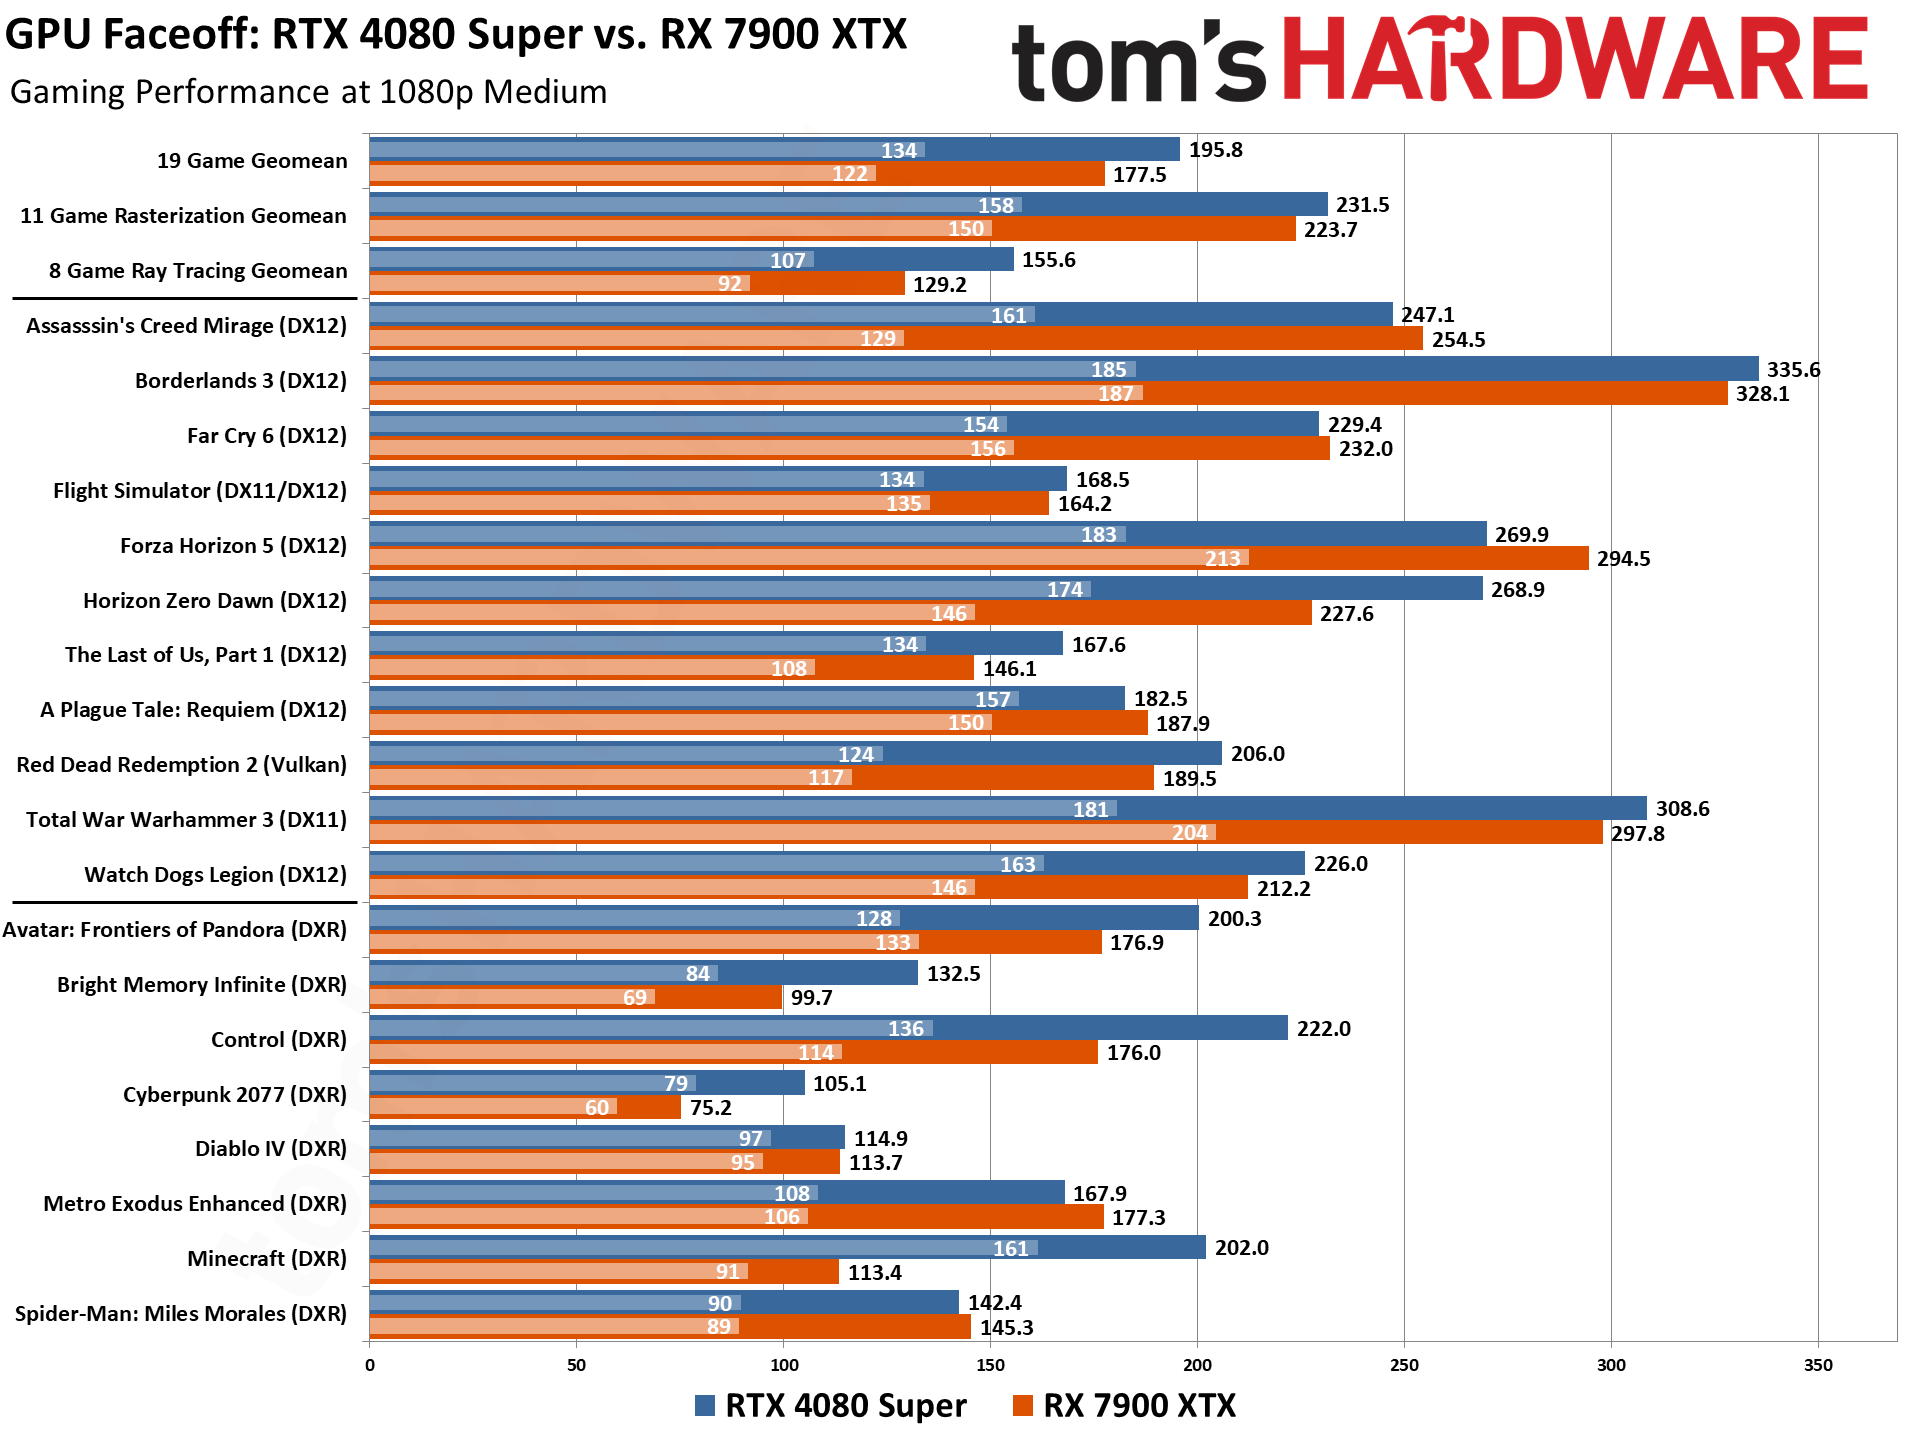 RTX 4080 Super vs RX 7900 XTX Benchmarks